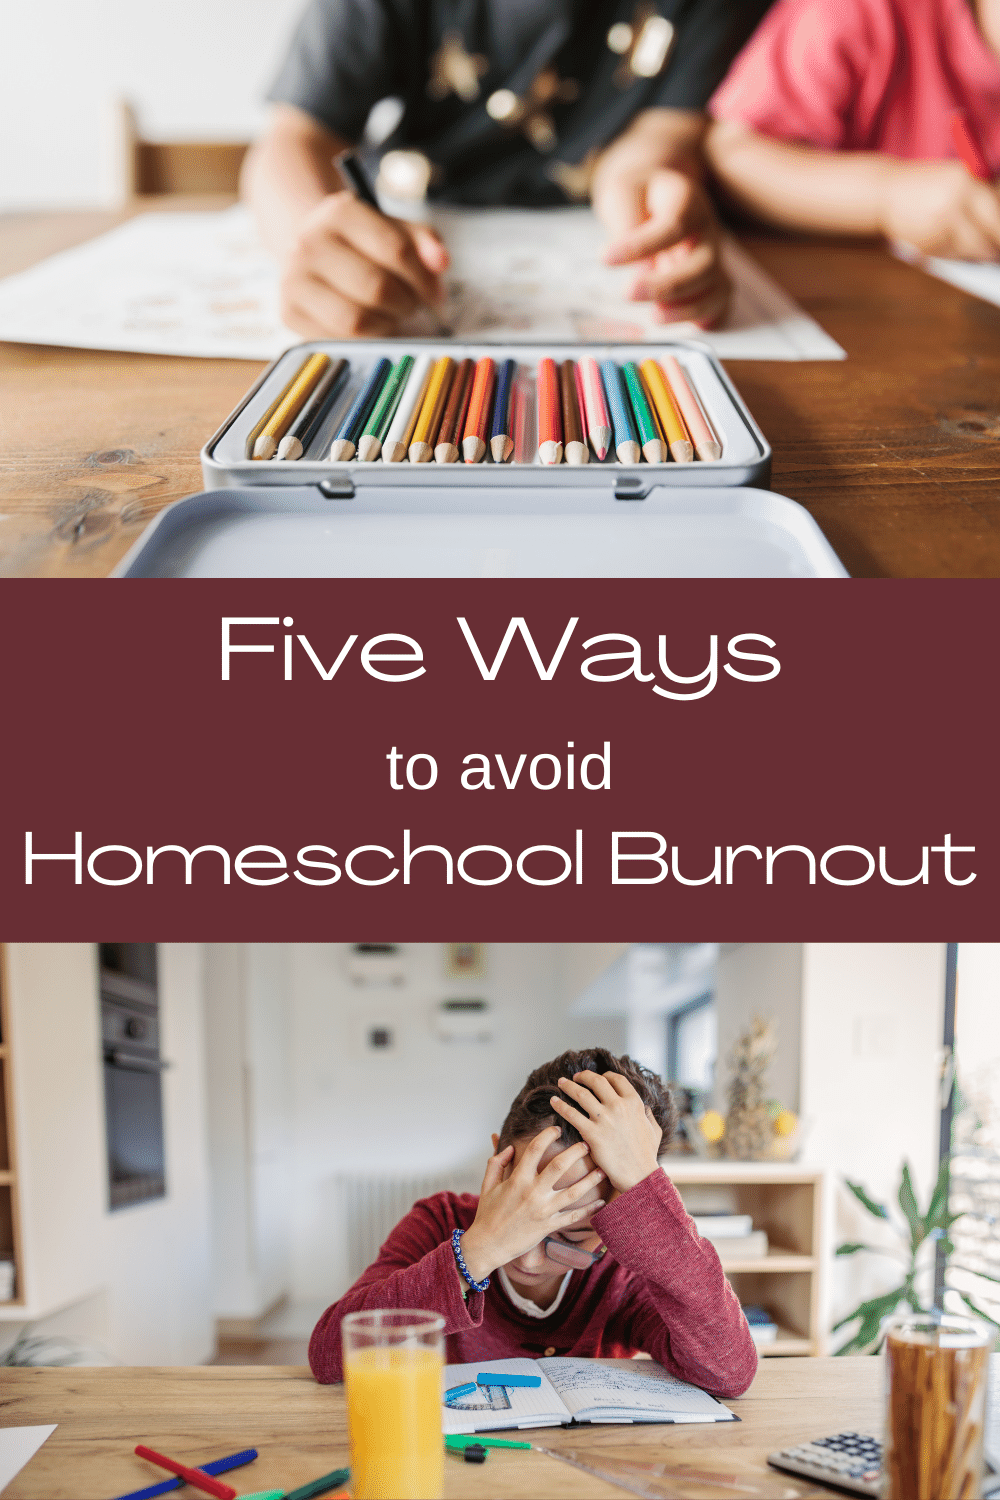 Pin Five Ways to Avoid Homeschool Burnout